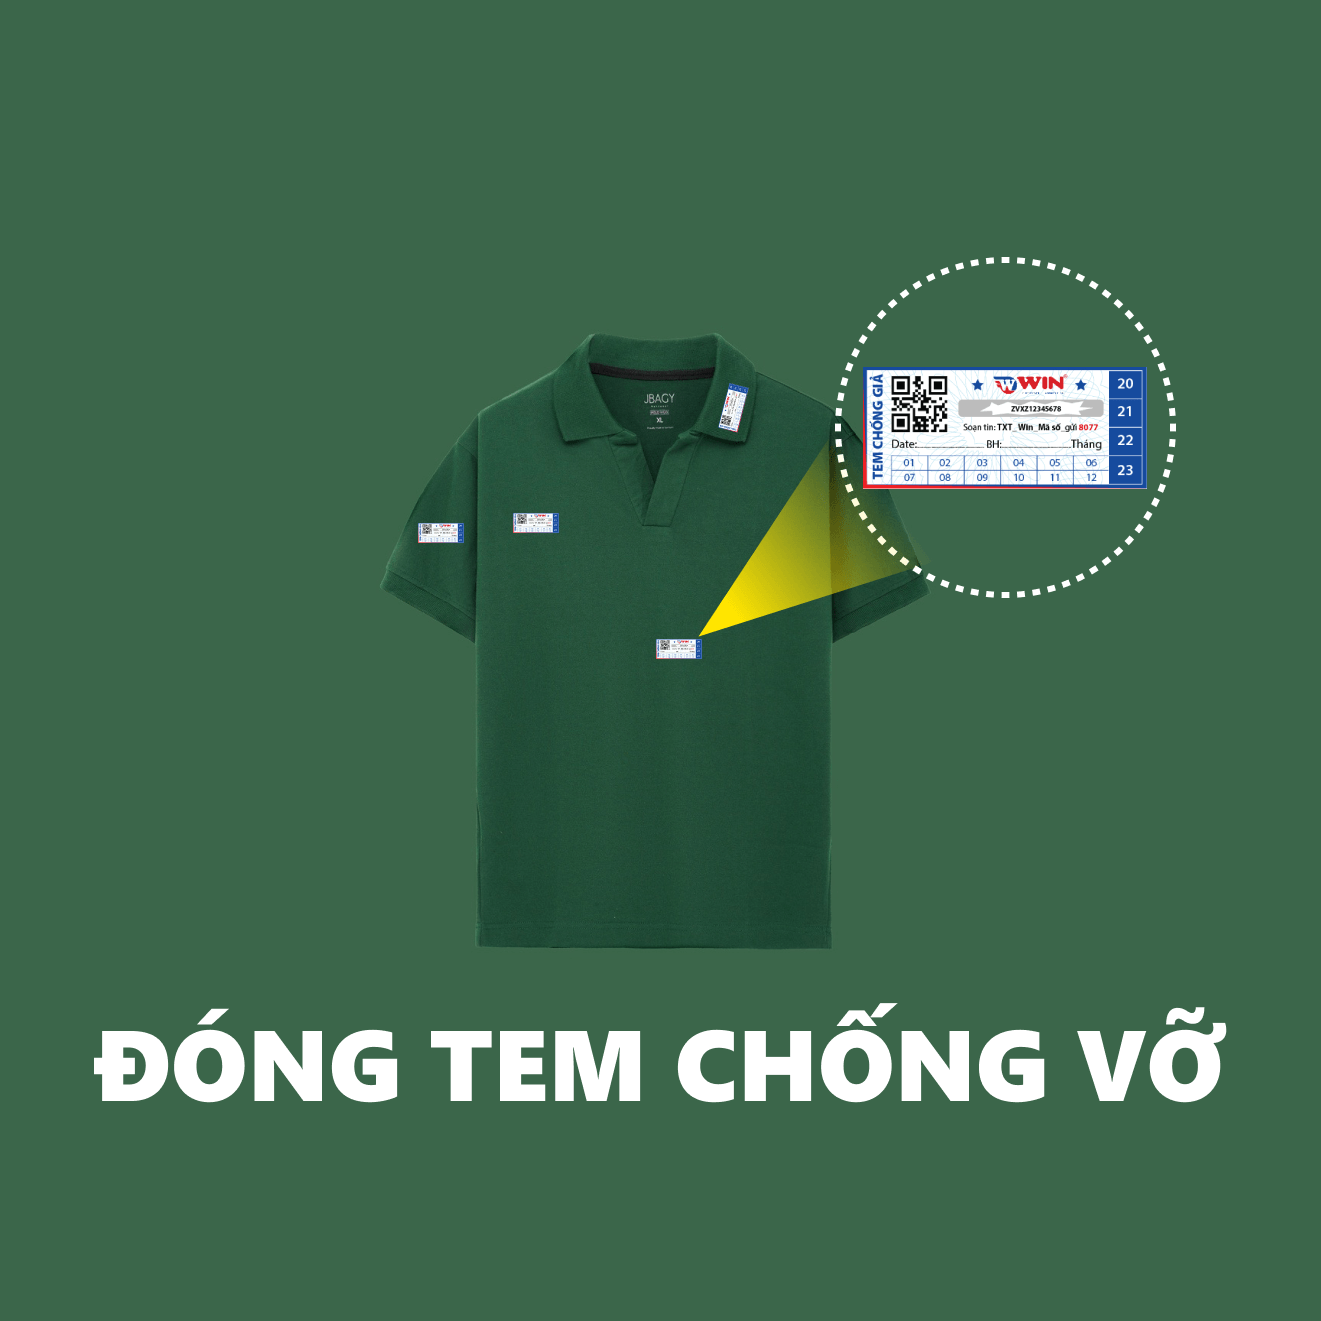 DONG TEM CHONG VO 2